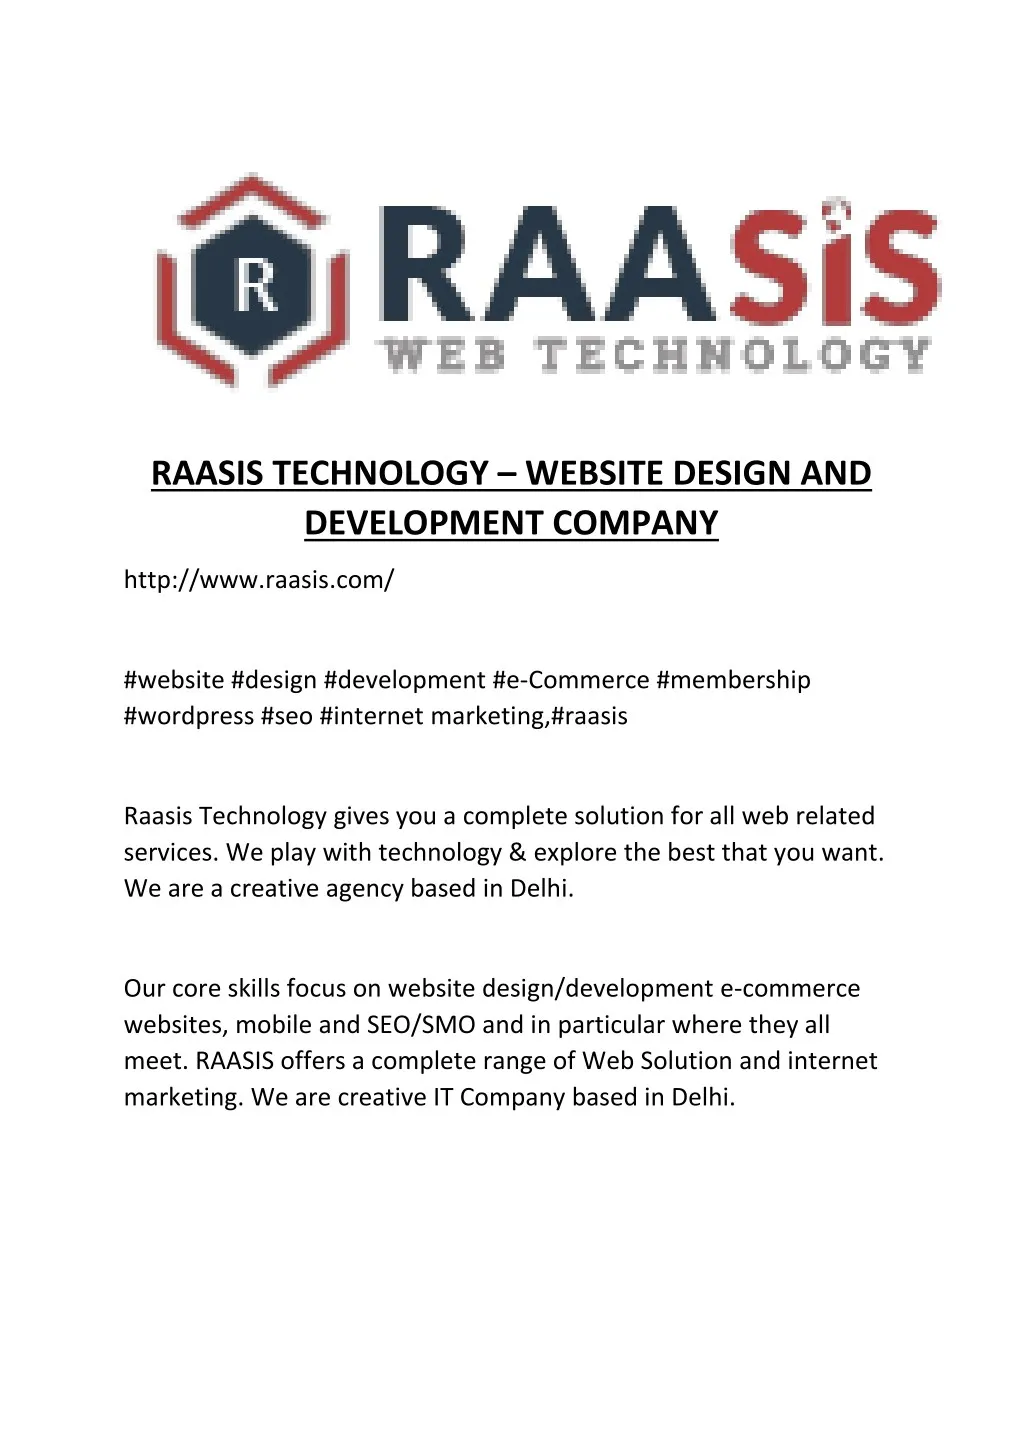 raasis technology website design and development